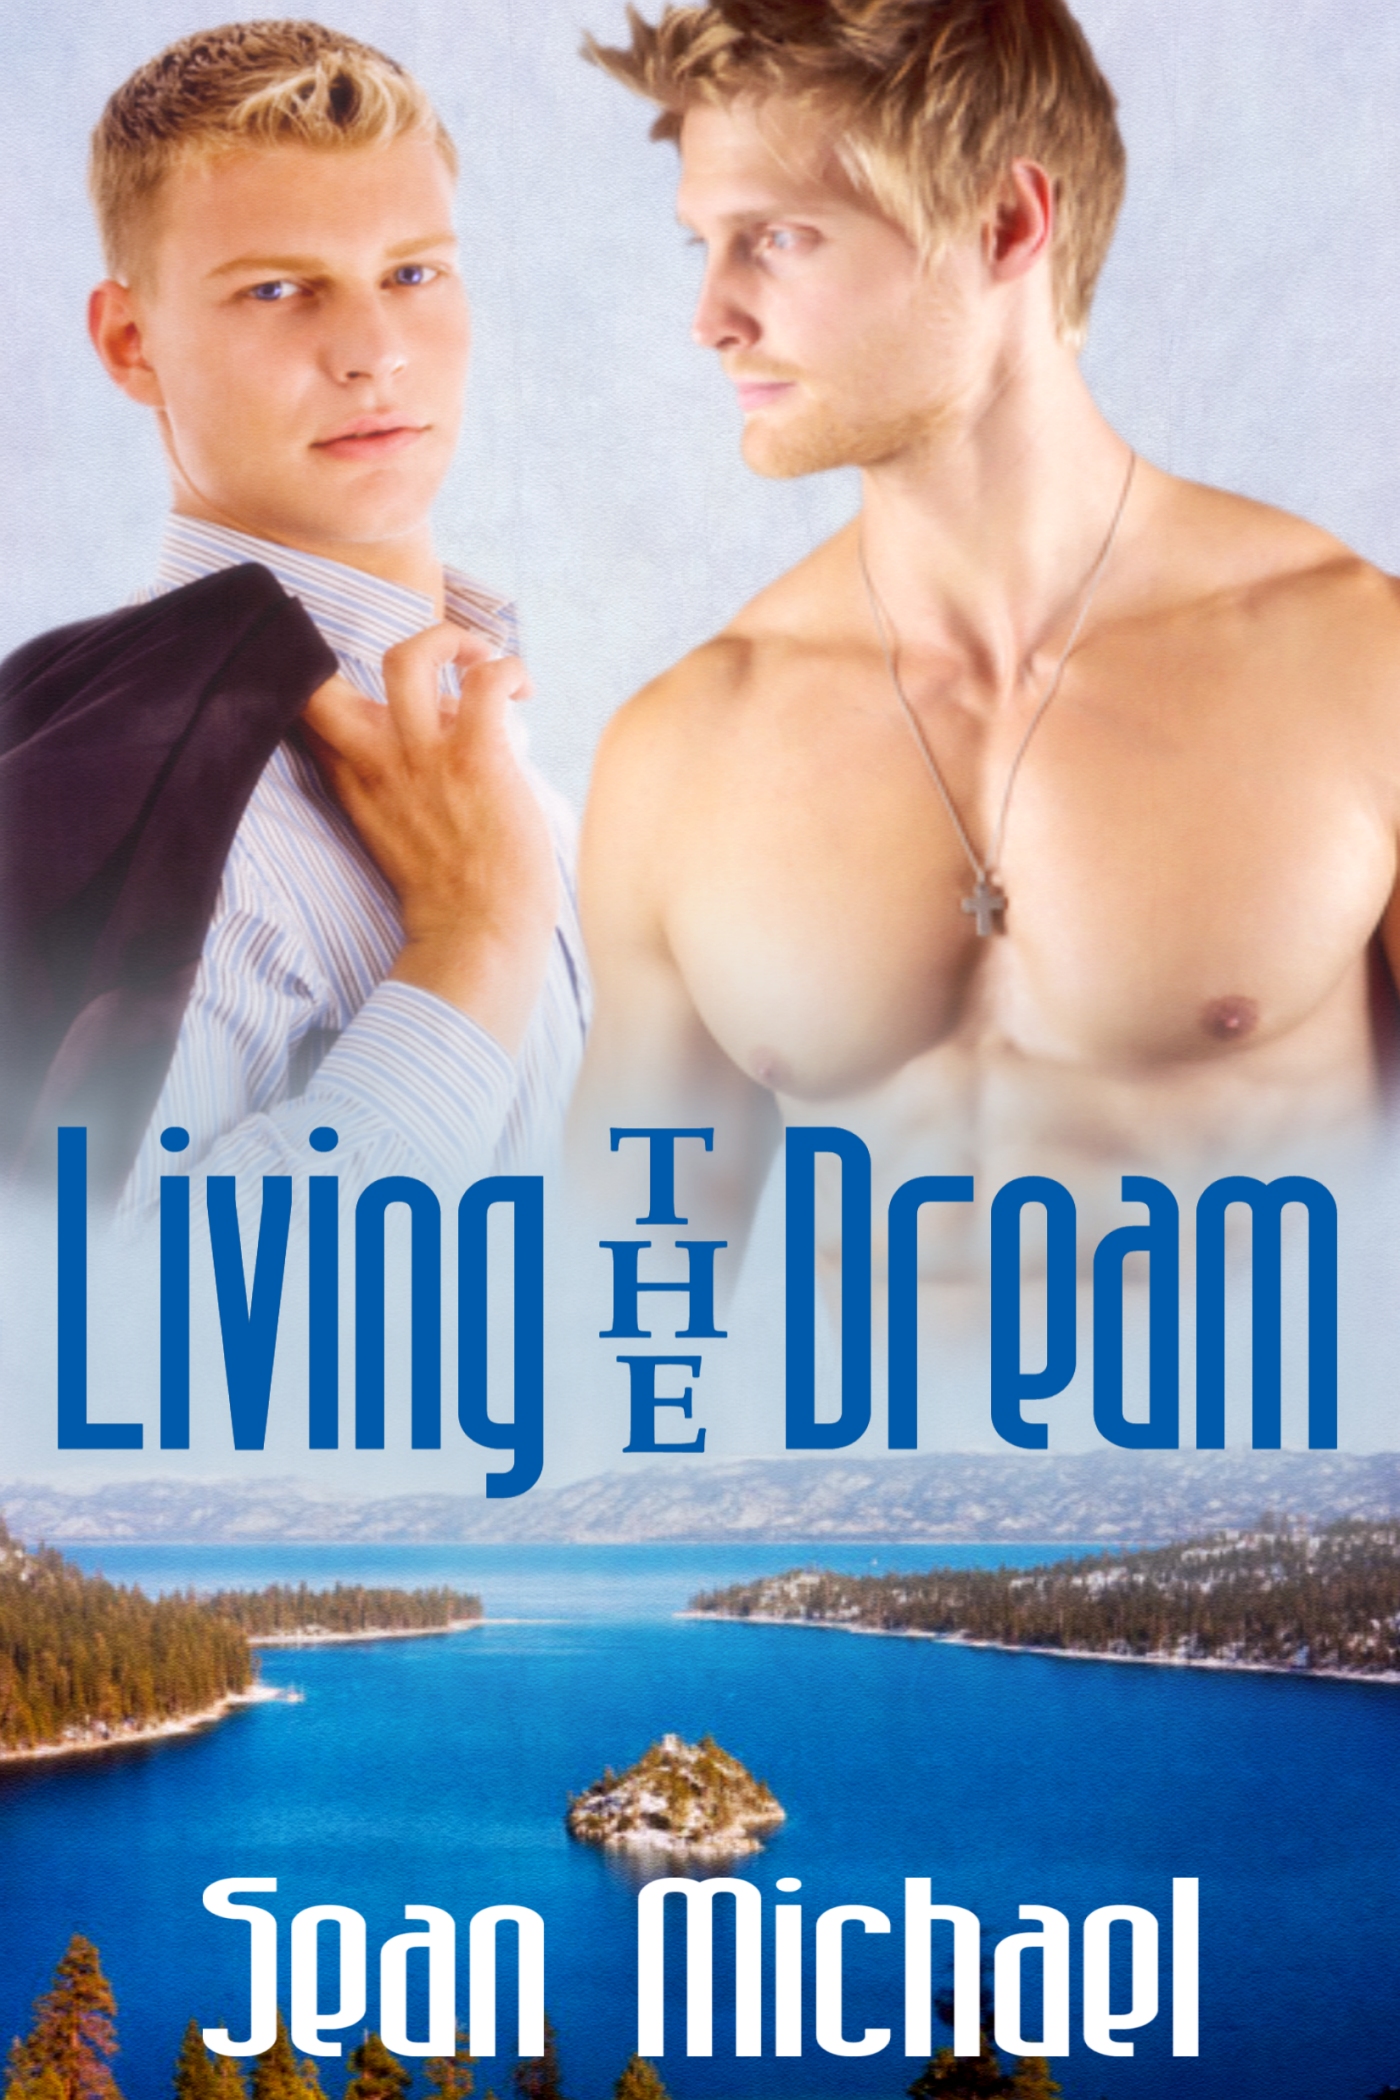 Living The Dream (2015) by Sean Michael